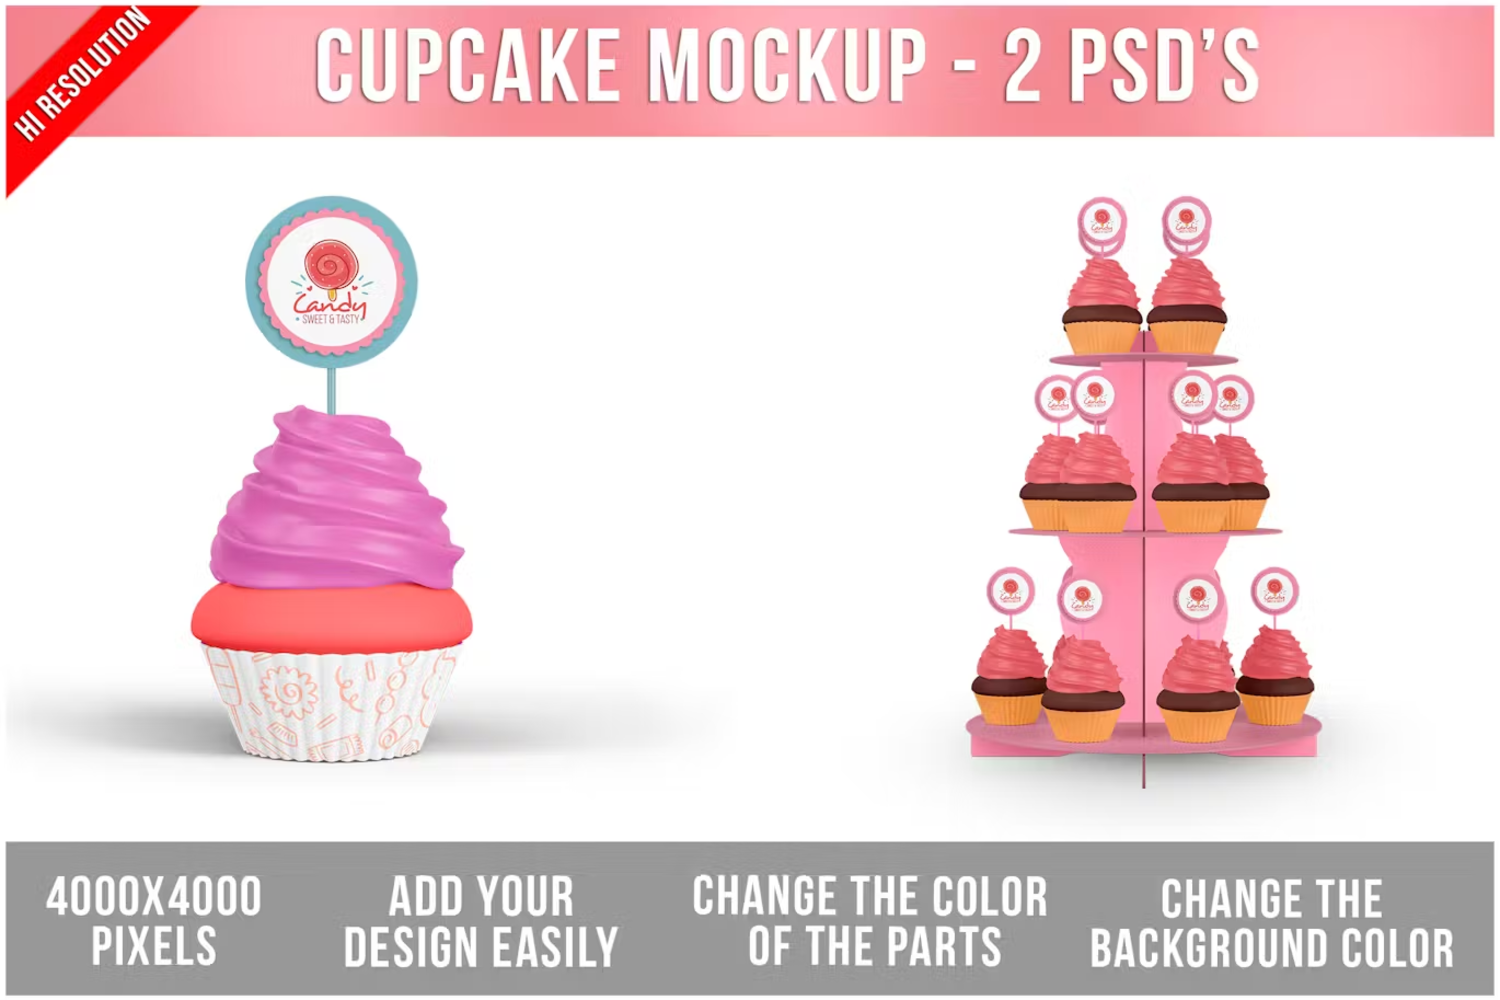 5820 定制纸杯蛋糕模板样机-Cupcake Mockup